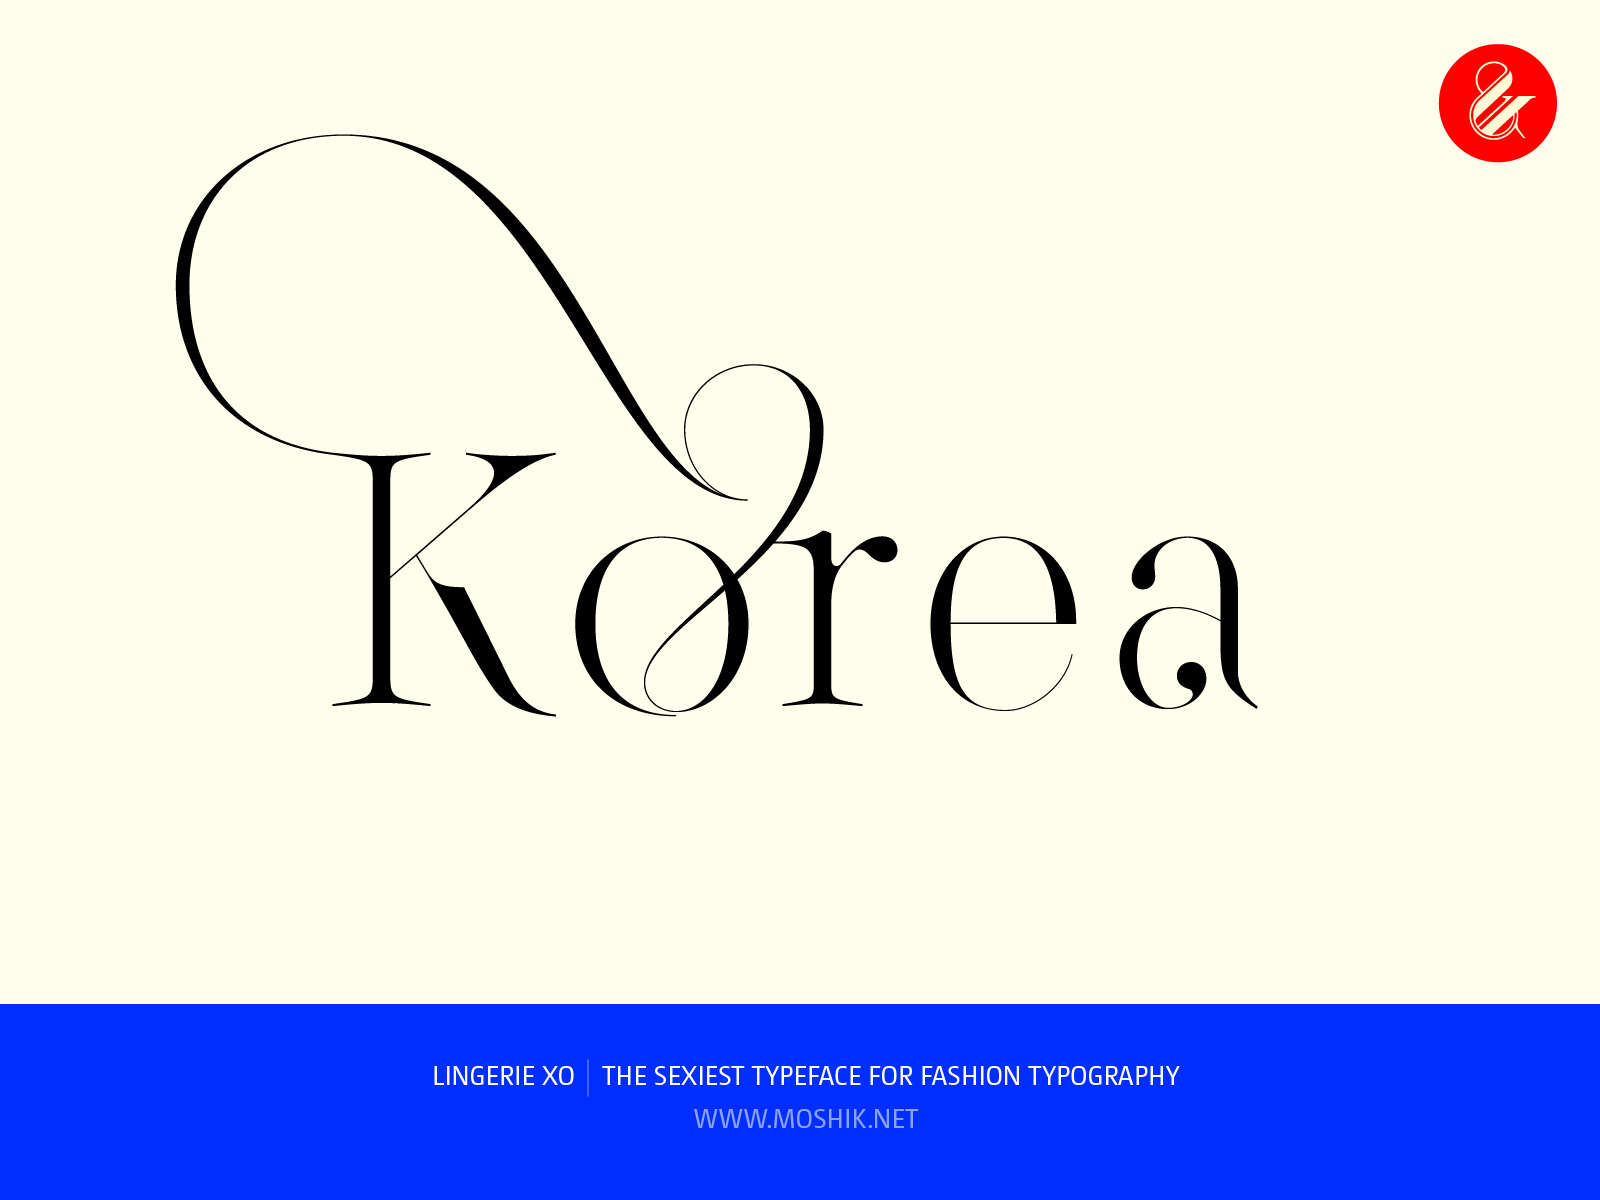 Korea logo, Lingerie XO Typeface, fashion fonts, best fonts 2021, best fonts for logos, sexy fonts, sexy logos, Vogue fonts, Moshik Nadav, Fashion magazine fonts, Must have fonts